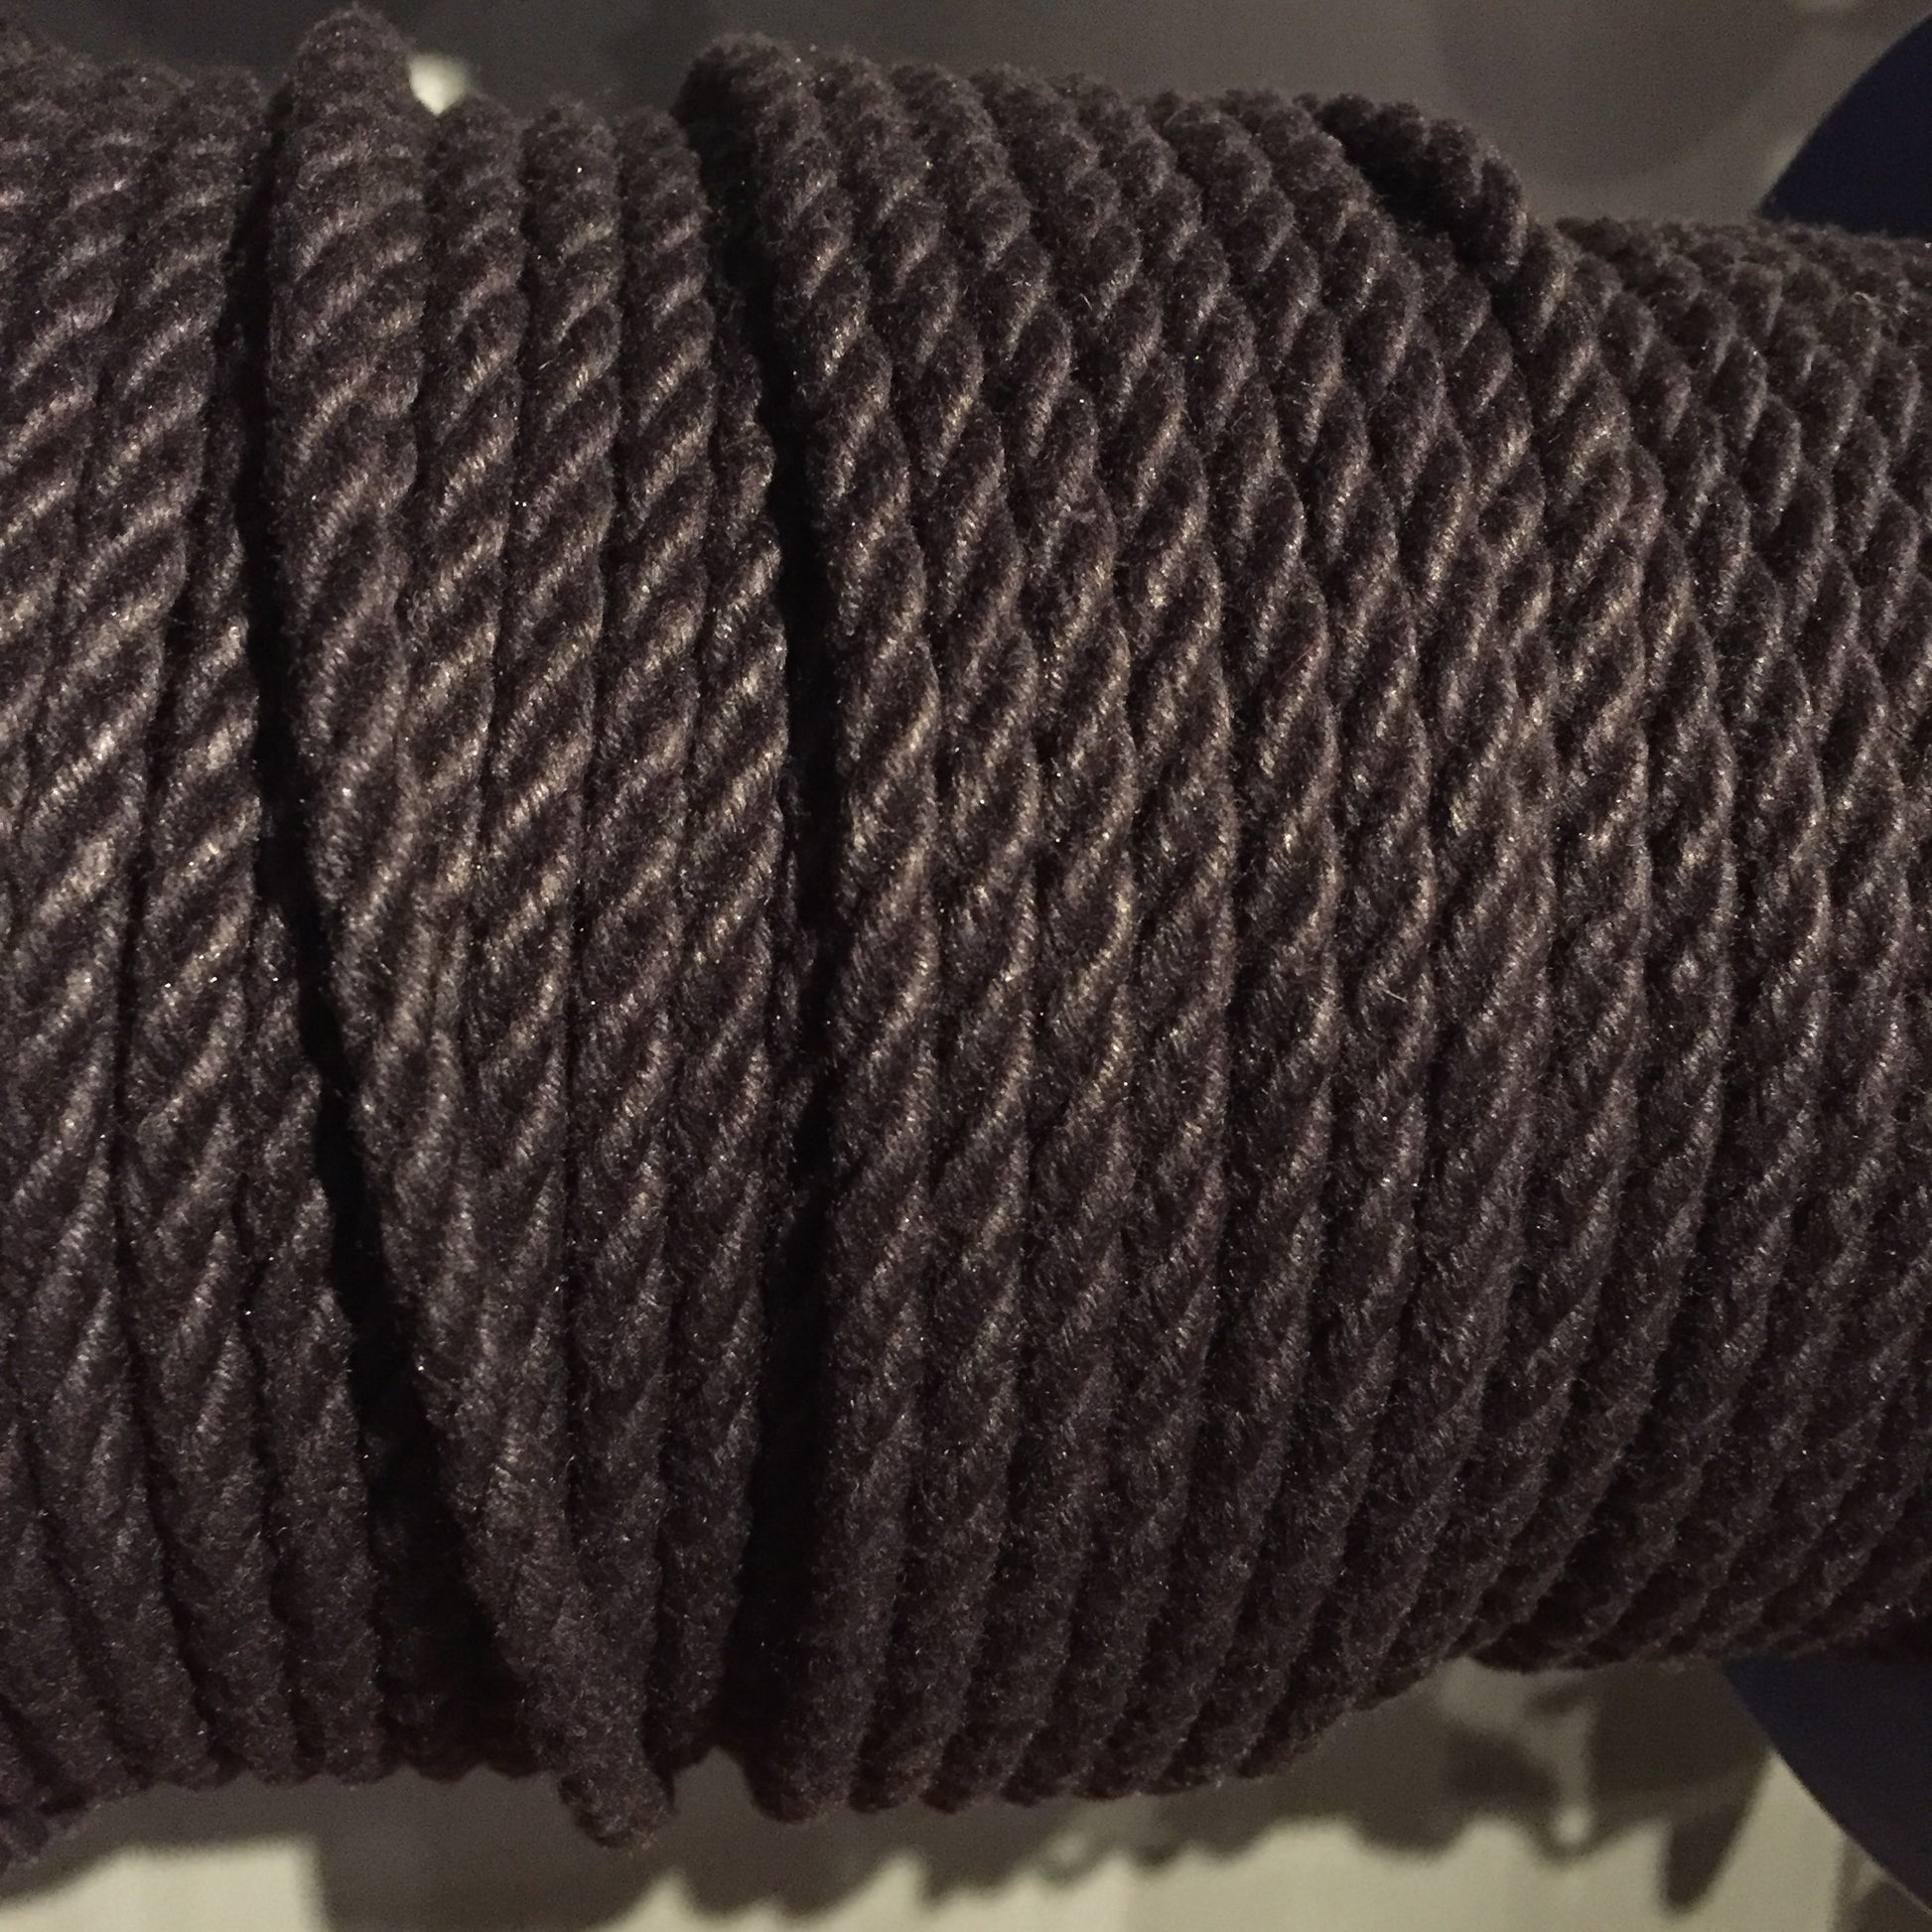 A spool of grey POSH Colorfast Synthetic Hemp Jute Rope.